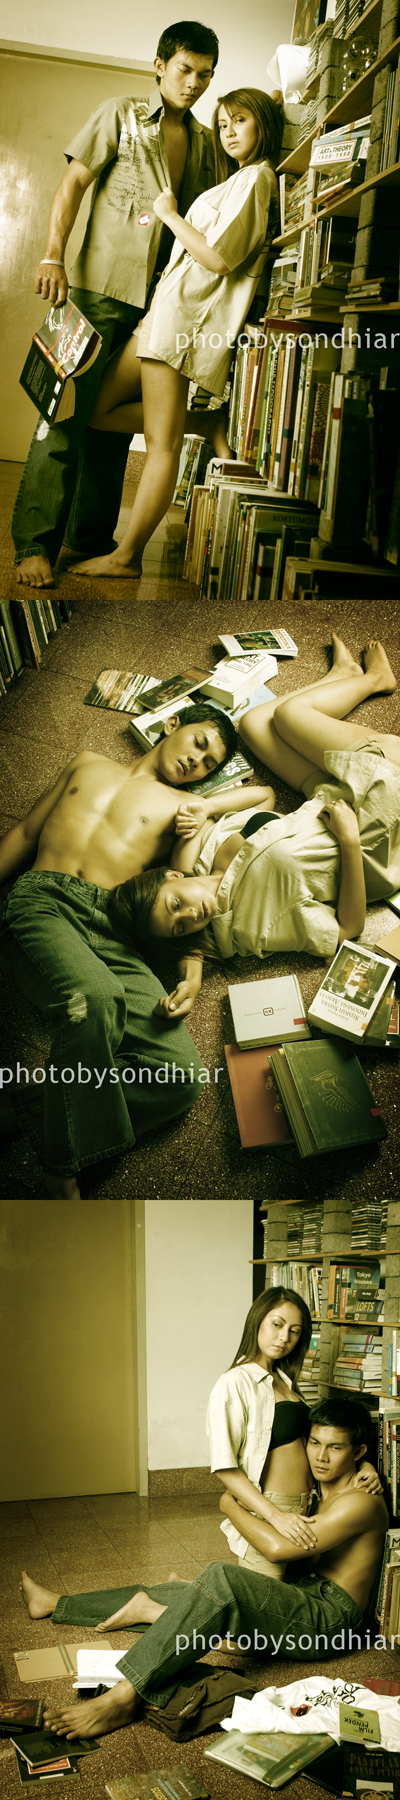 Male model photo shoot of photobysondhiar in rumah buku - hegarmanah 52 bandung, makeup by yarry makeup artist